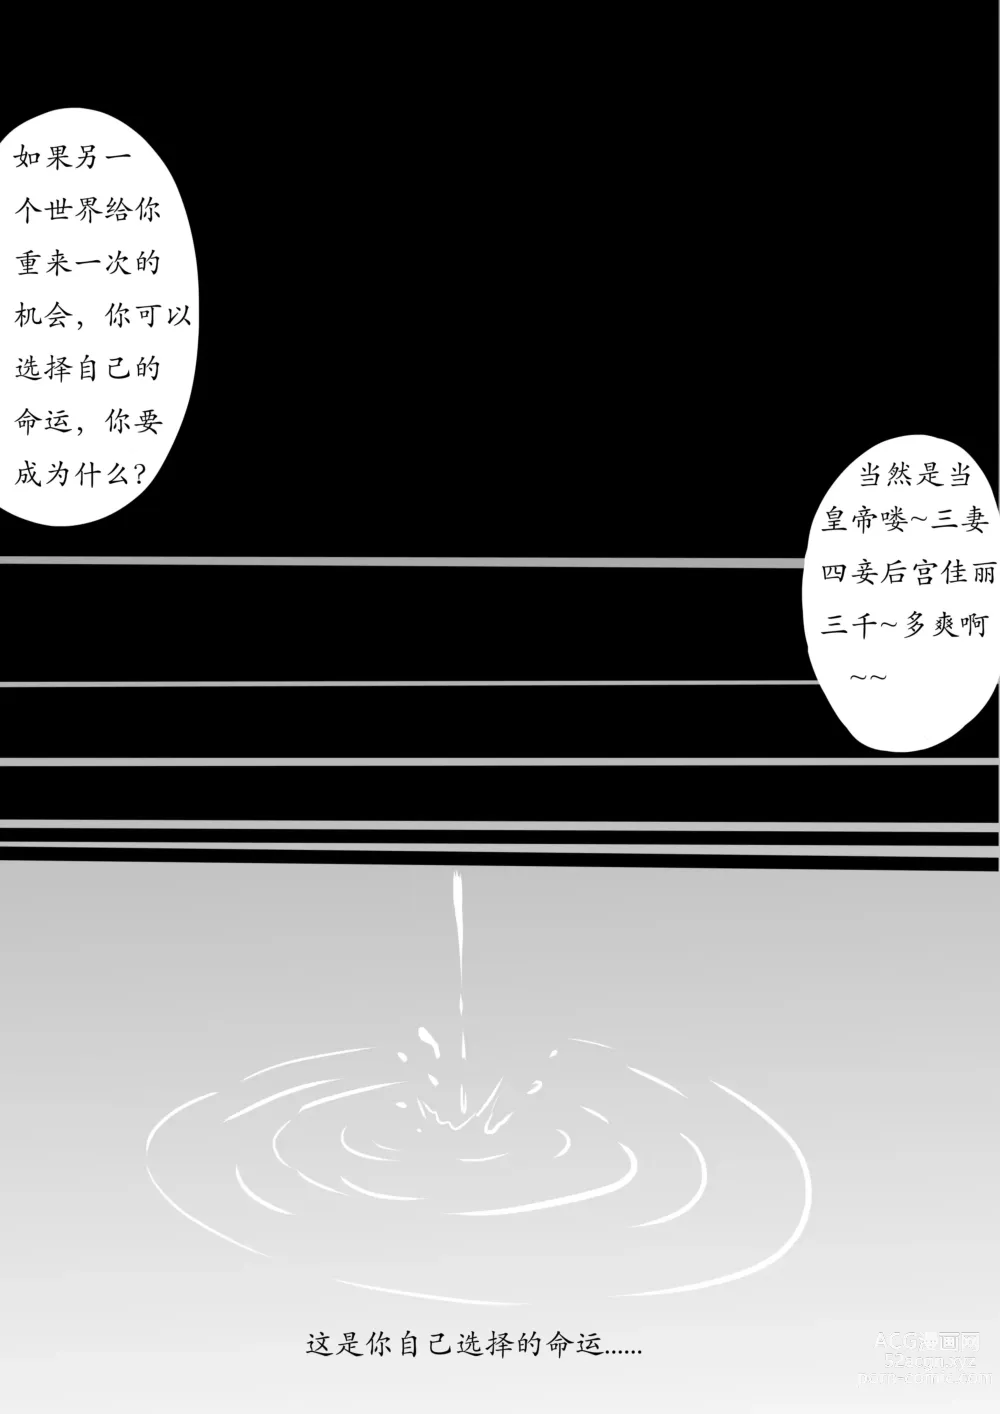 Page 7 of doujinshi 暗黑西游记第一集 V1 & V2